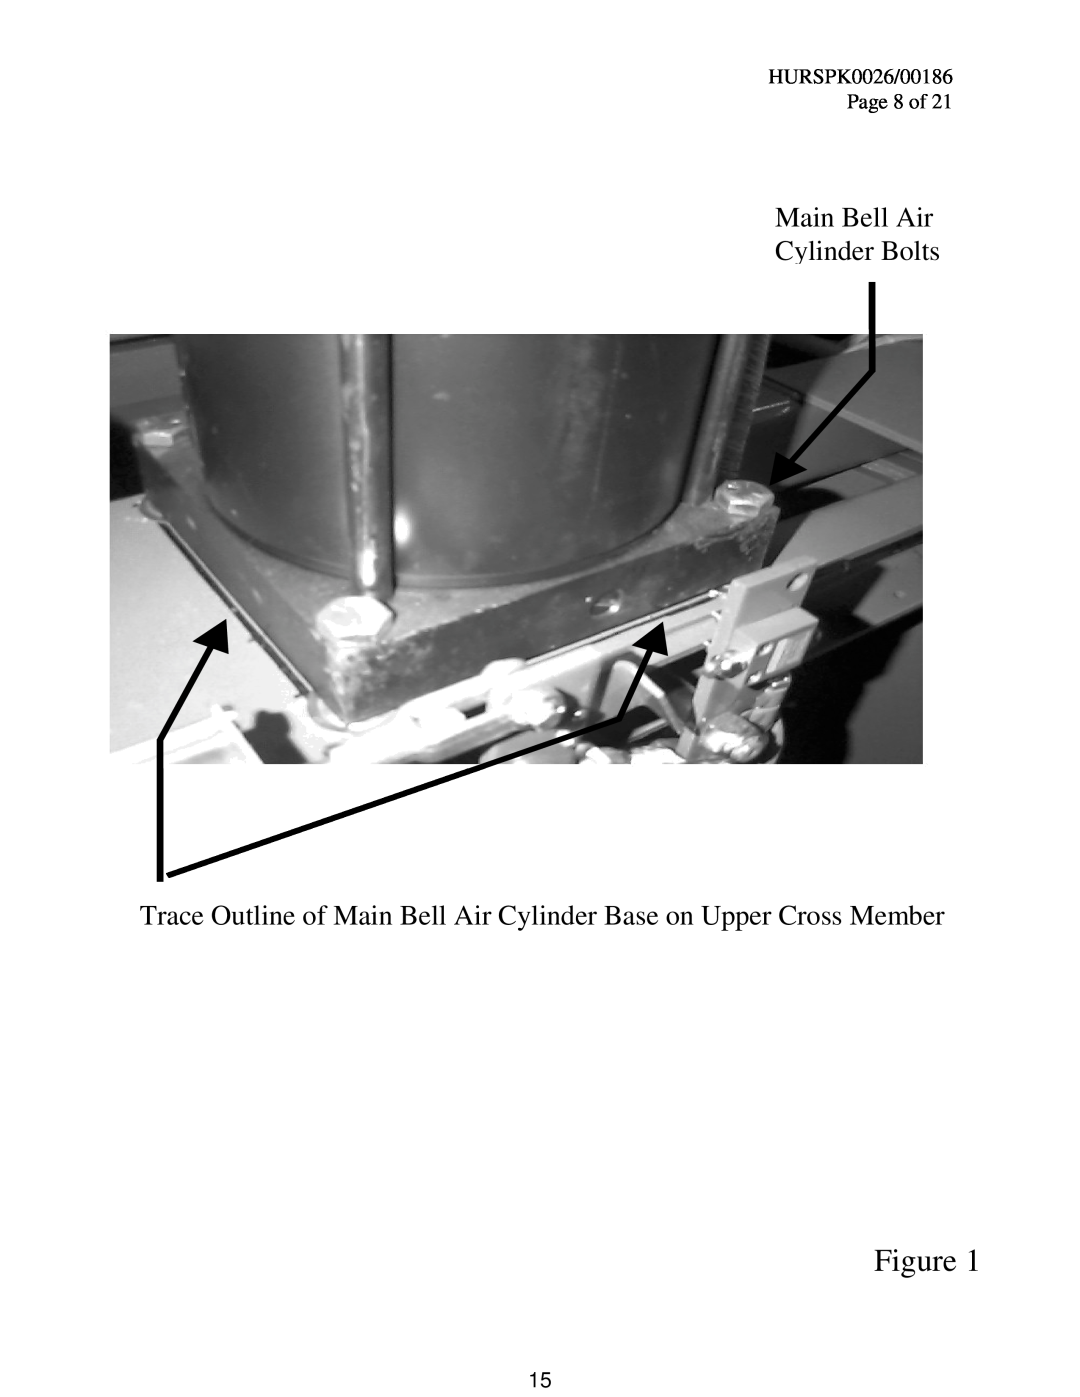 Milnor KURSPK0025 manual Main Bell Air Cylinder Bolts, Trace Outline of Main Bell Air Cylinder Base on Upper Cross Member 